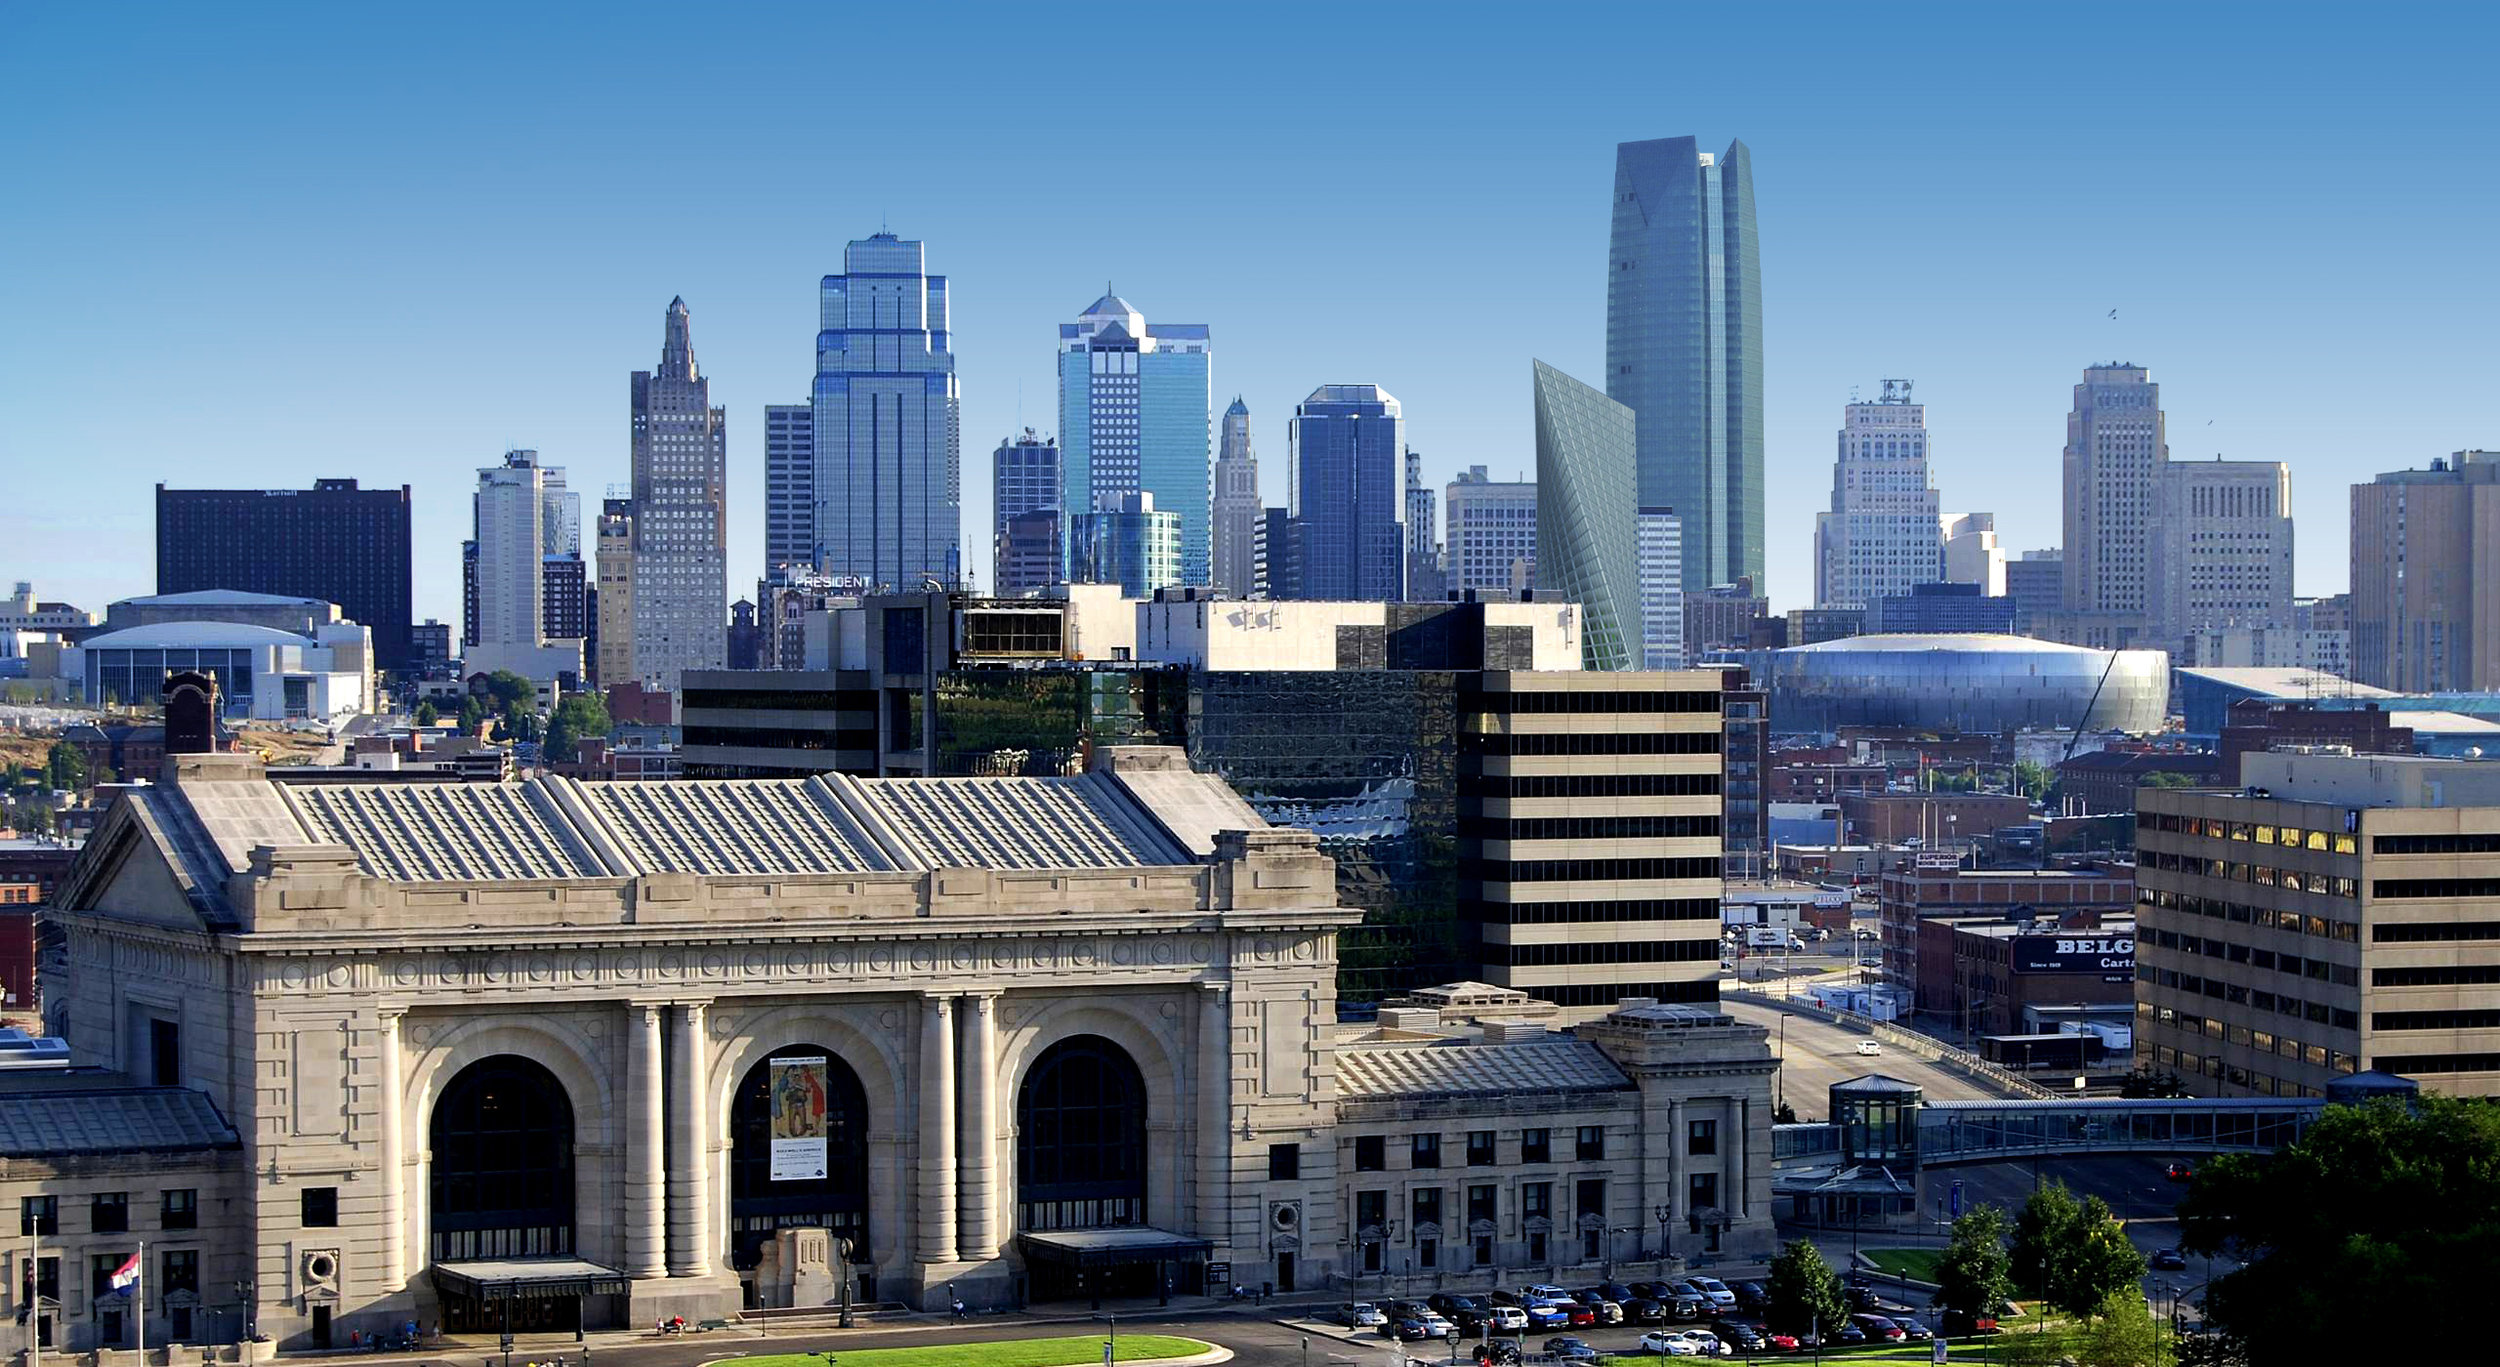 Kansas City: Features the Nelson-Atkins Museum of Art and Worlds of Fun amusement park. 2500x1370 HD Wallpaper.